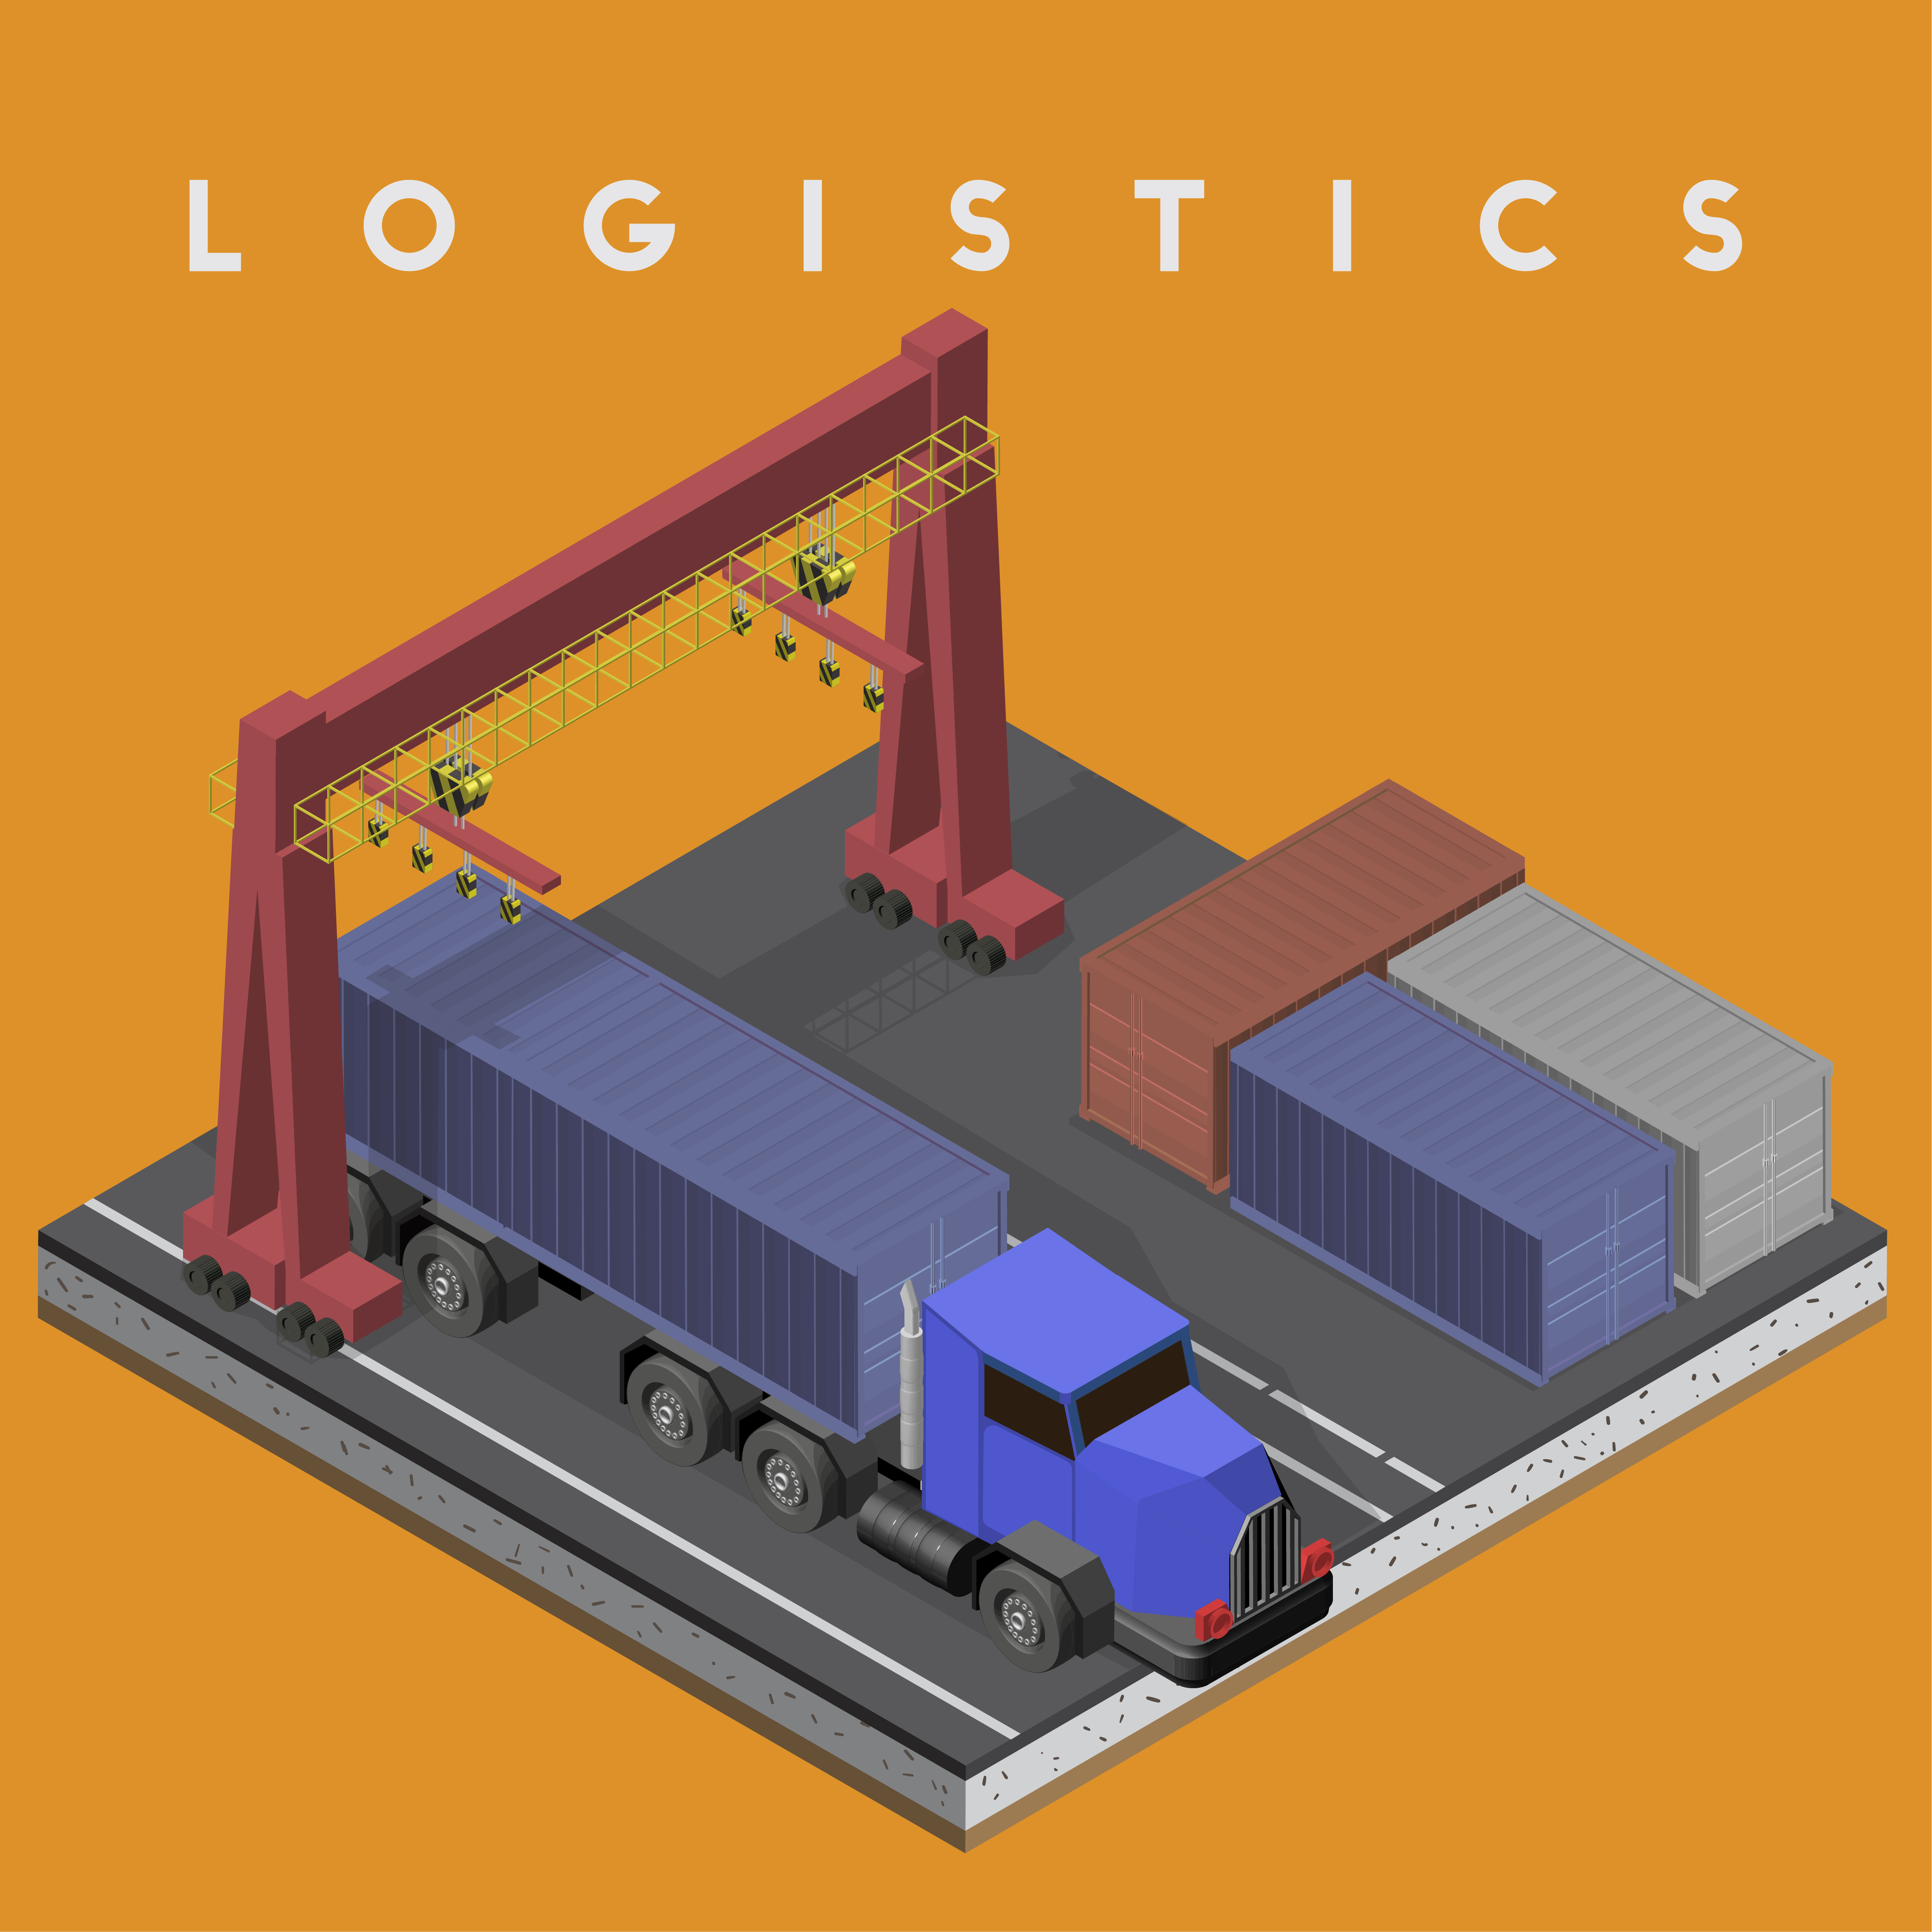 logistics images download free